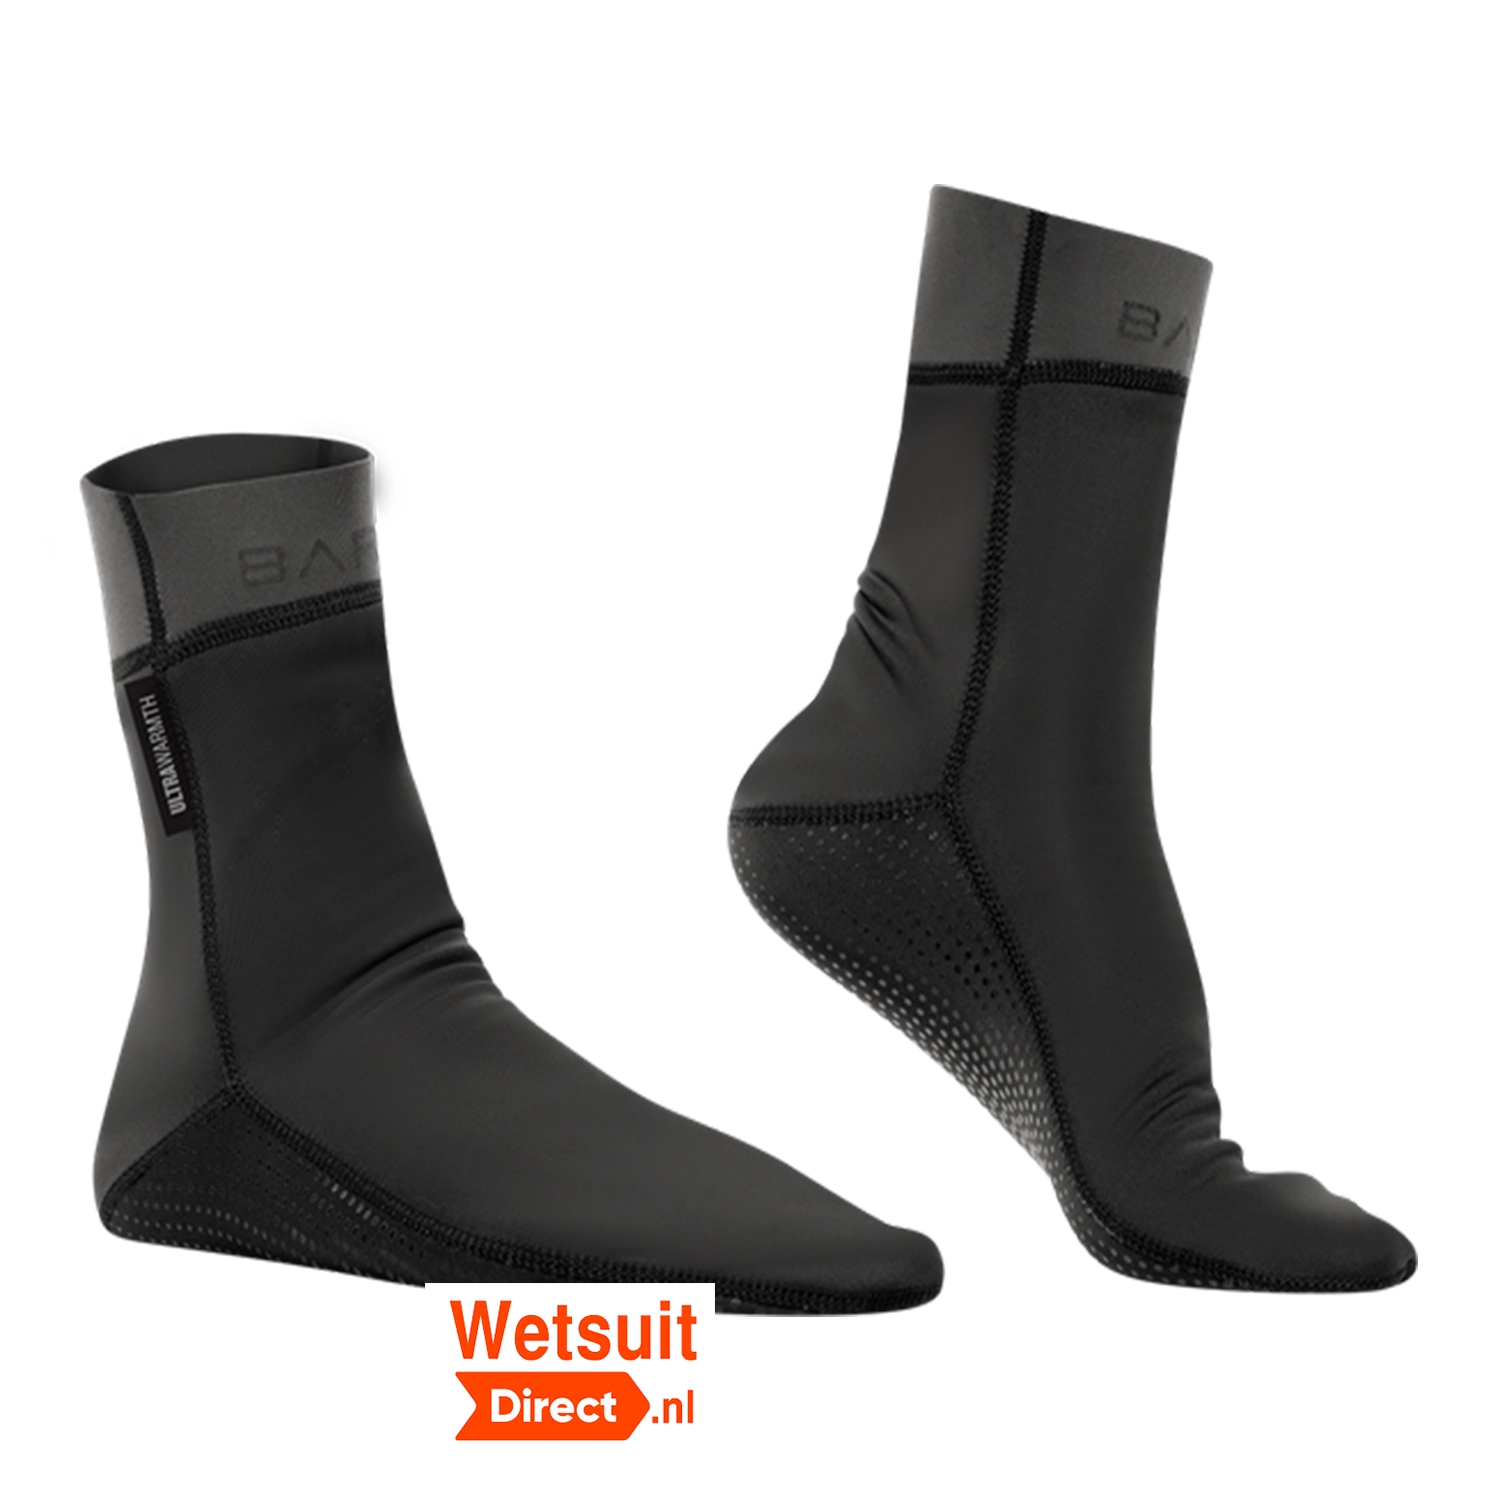 BARE_Ultrawarmth-sokken-wetsuit-direct